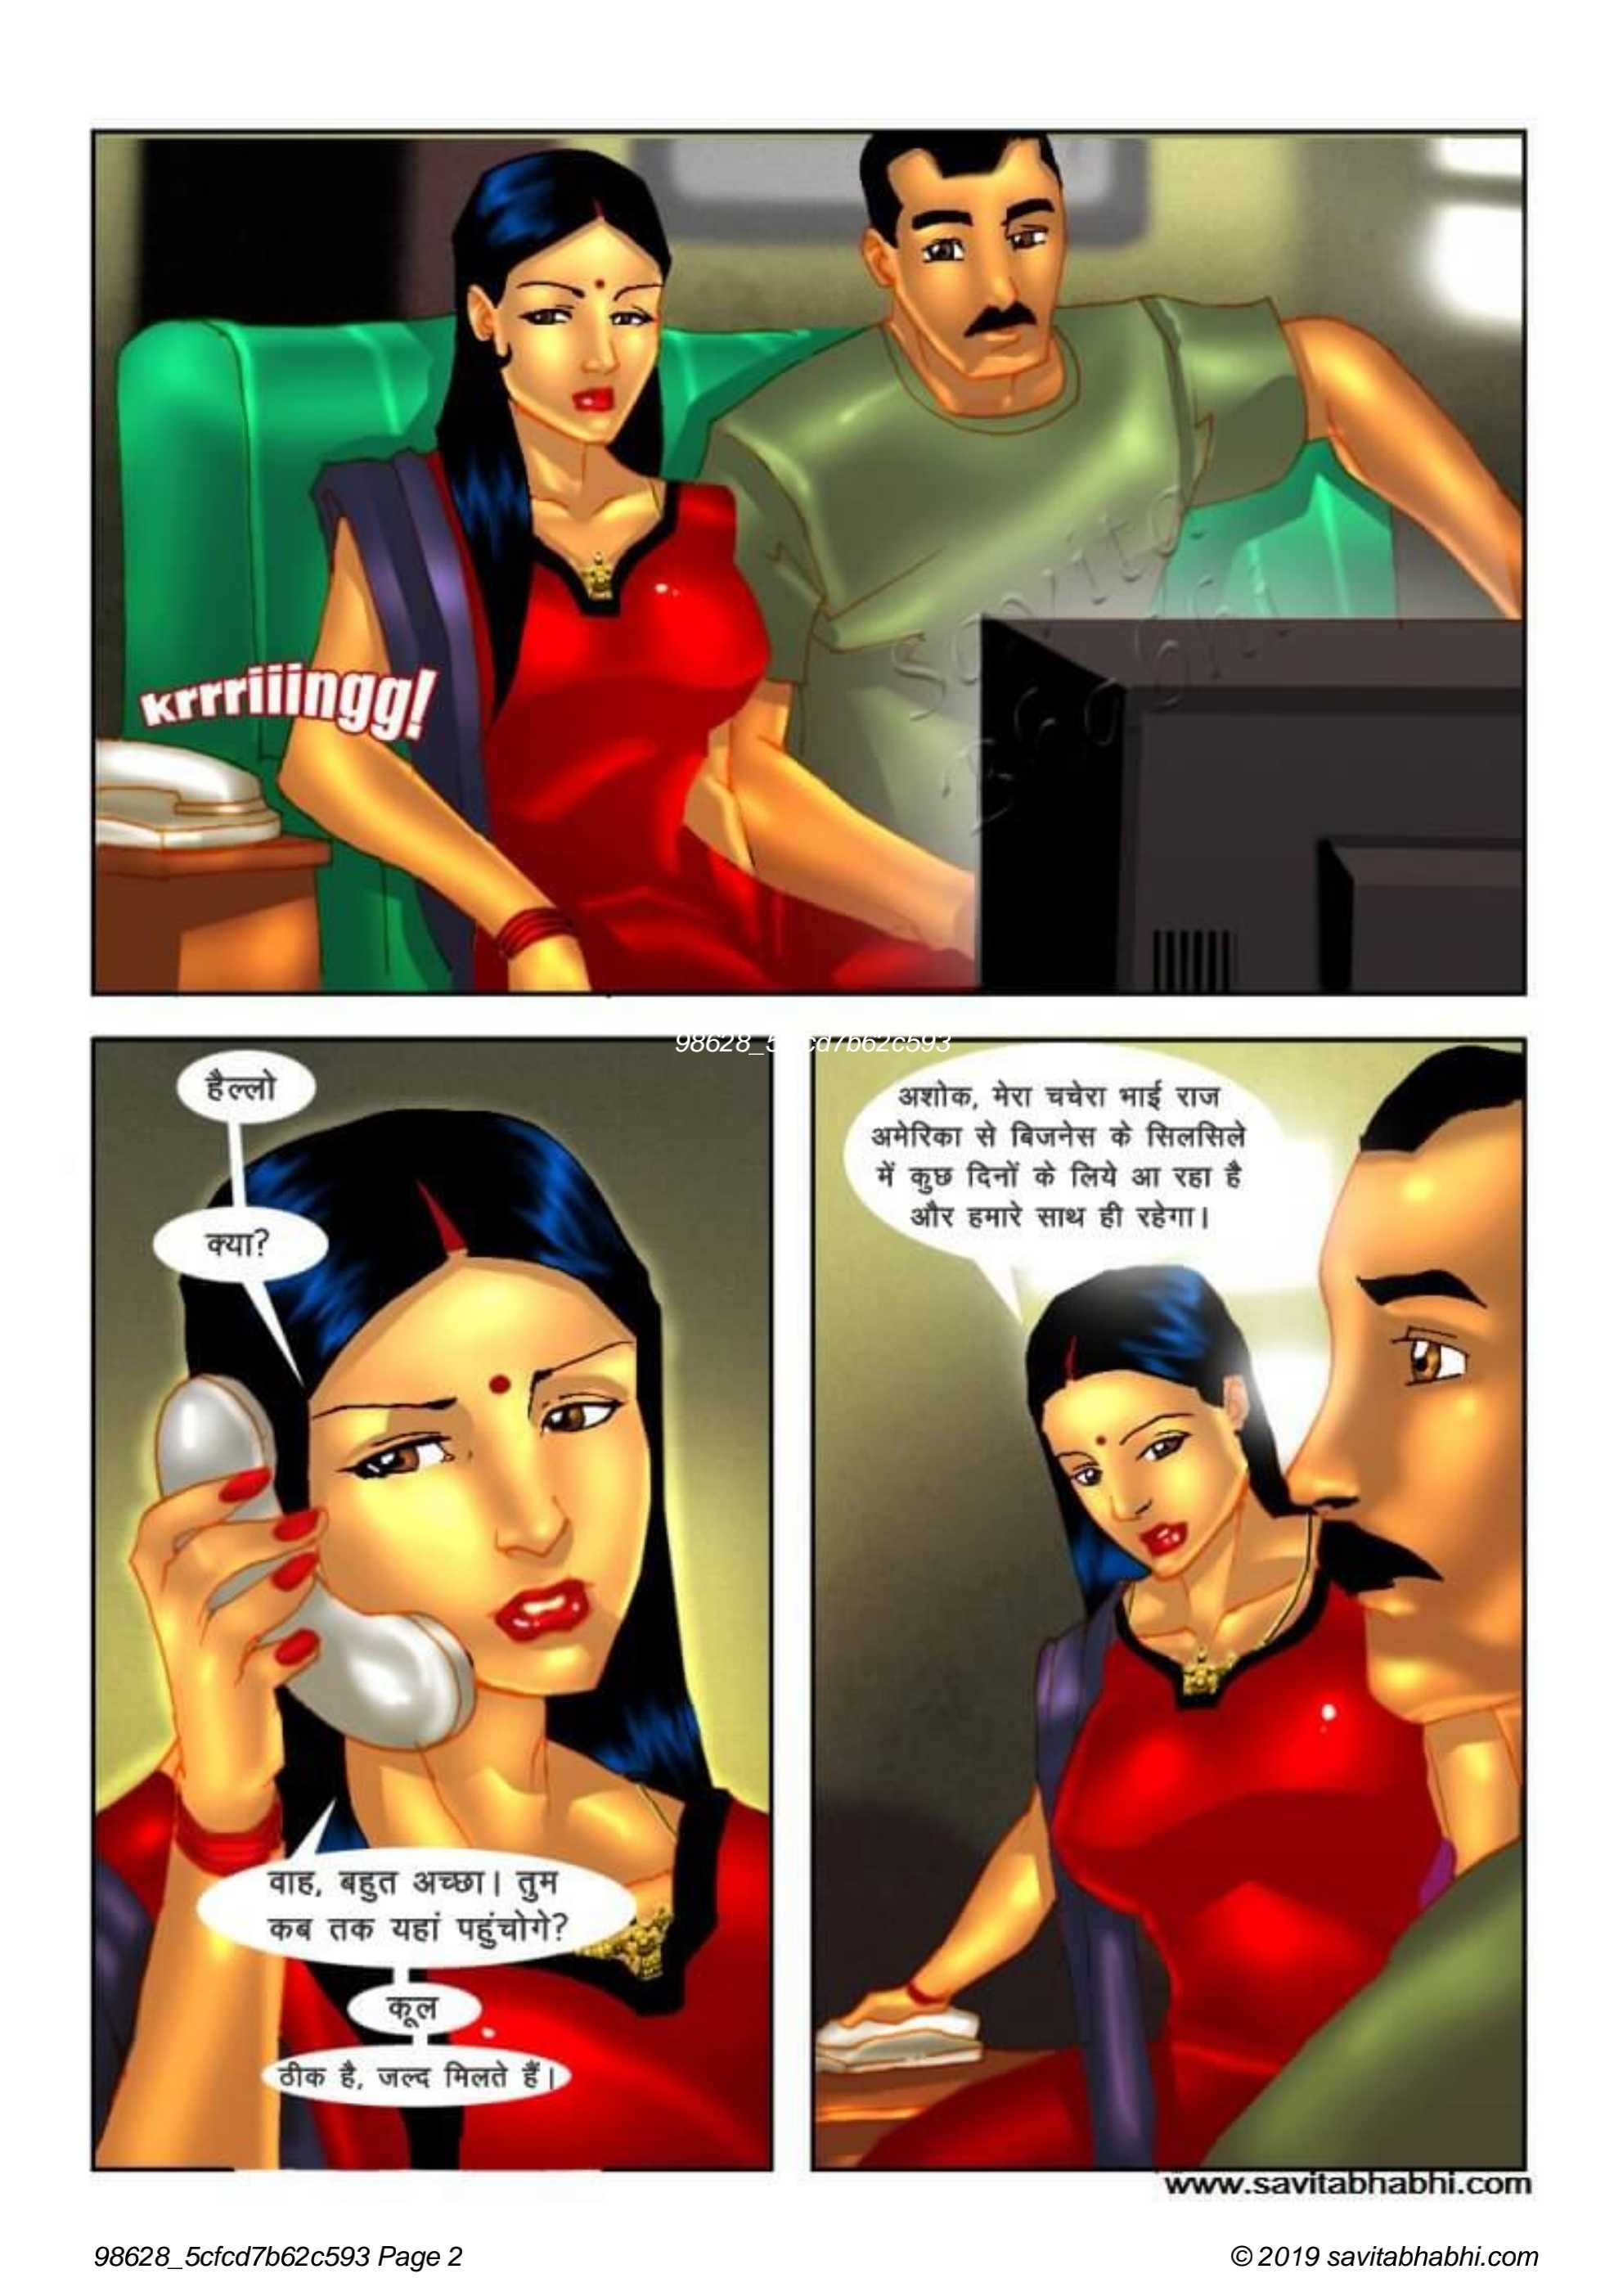 danie cilliers recommends savita bhabhi episode 4 pic